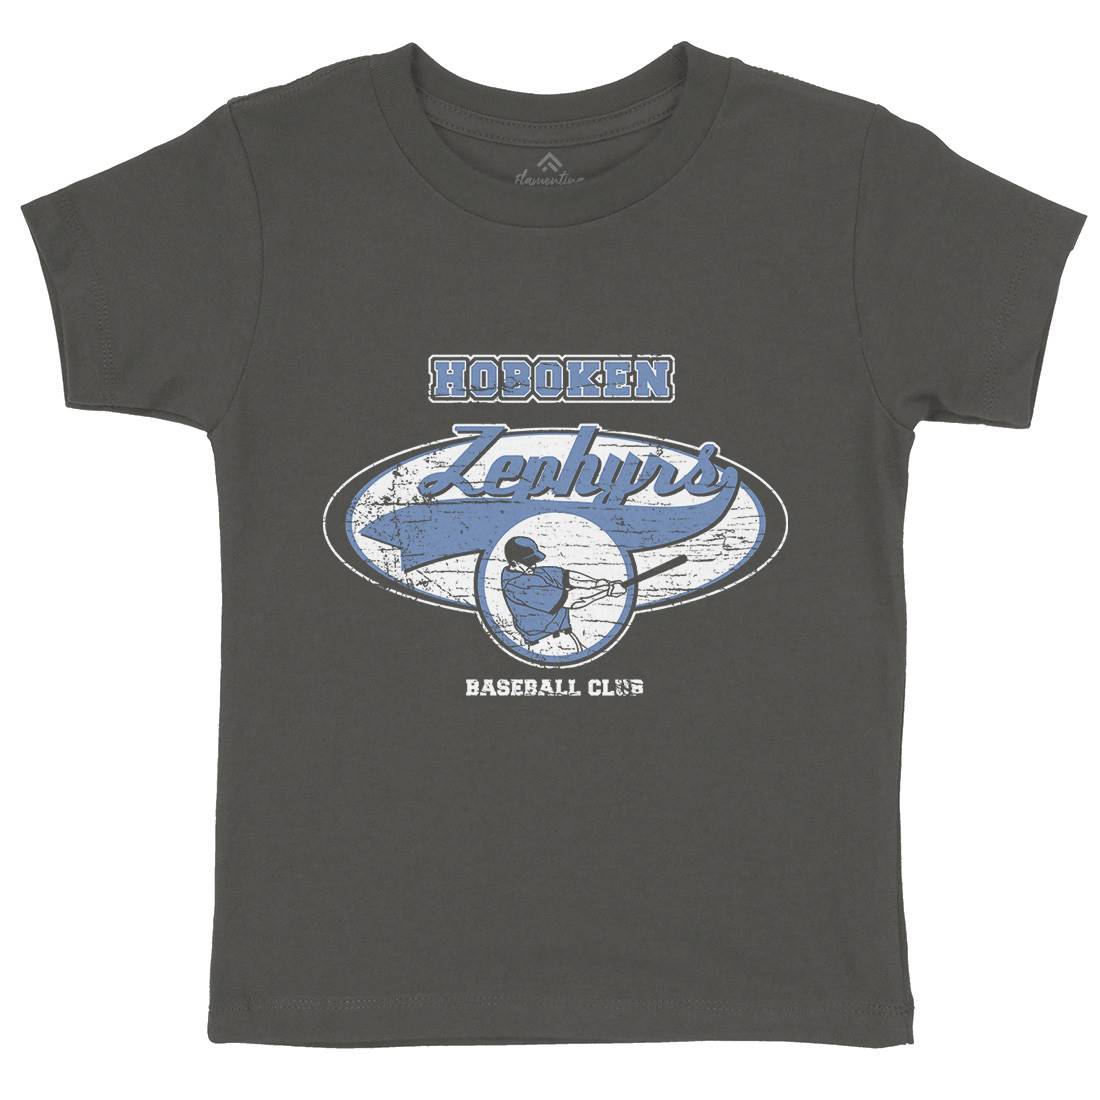 Hoboken Zephyrs Kids Organic Crew Neck T-Shirt Sport D119